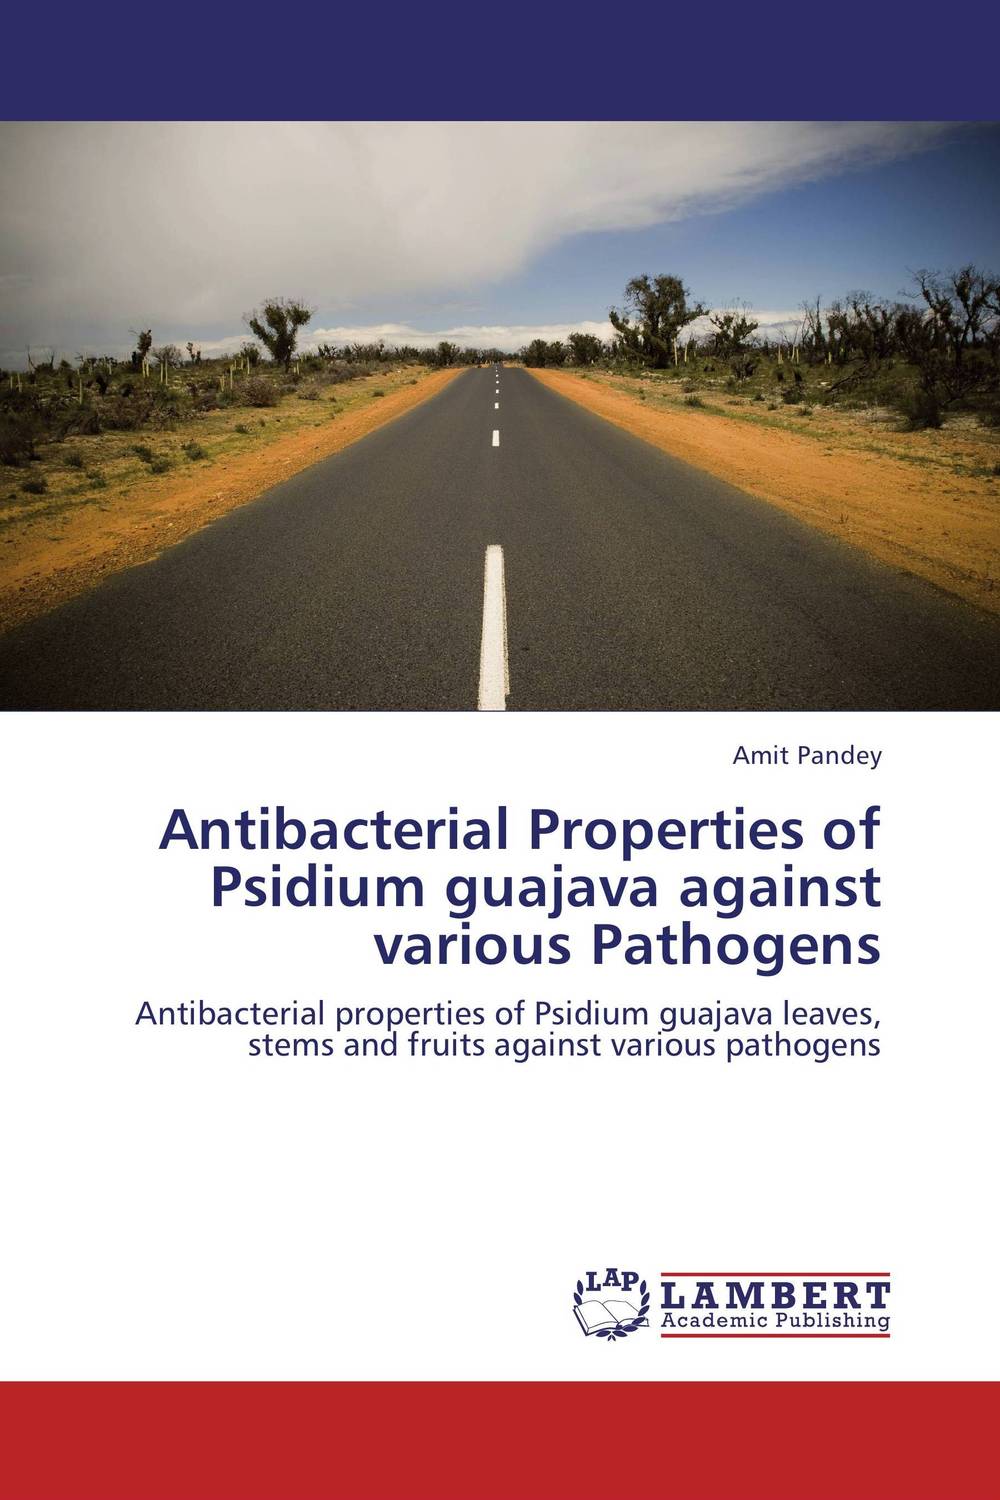 Antibacterial Properties of Psidium guajava against various Pathogens